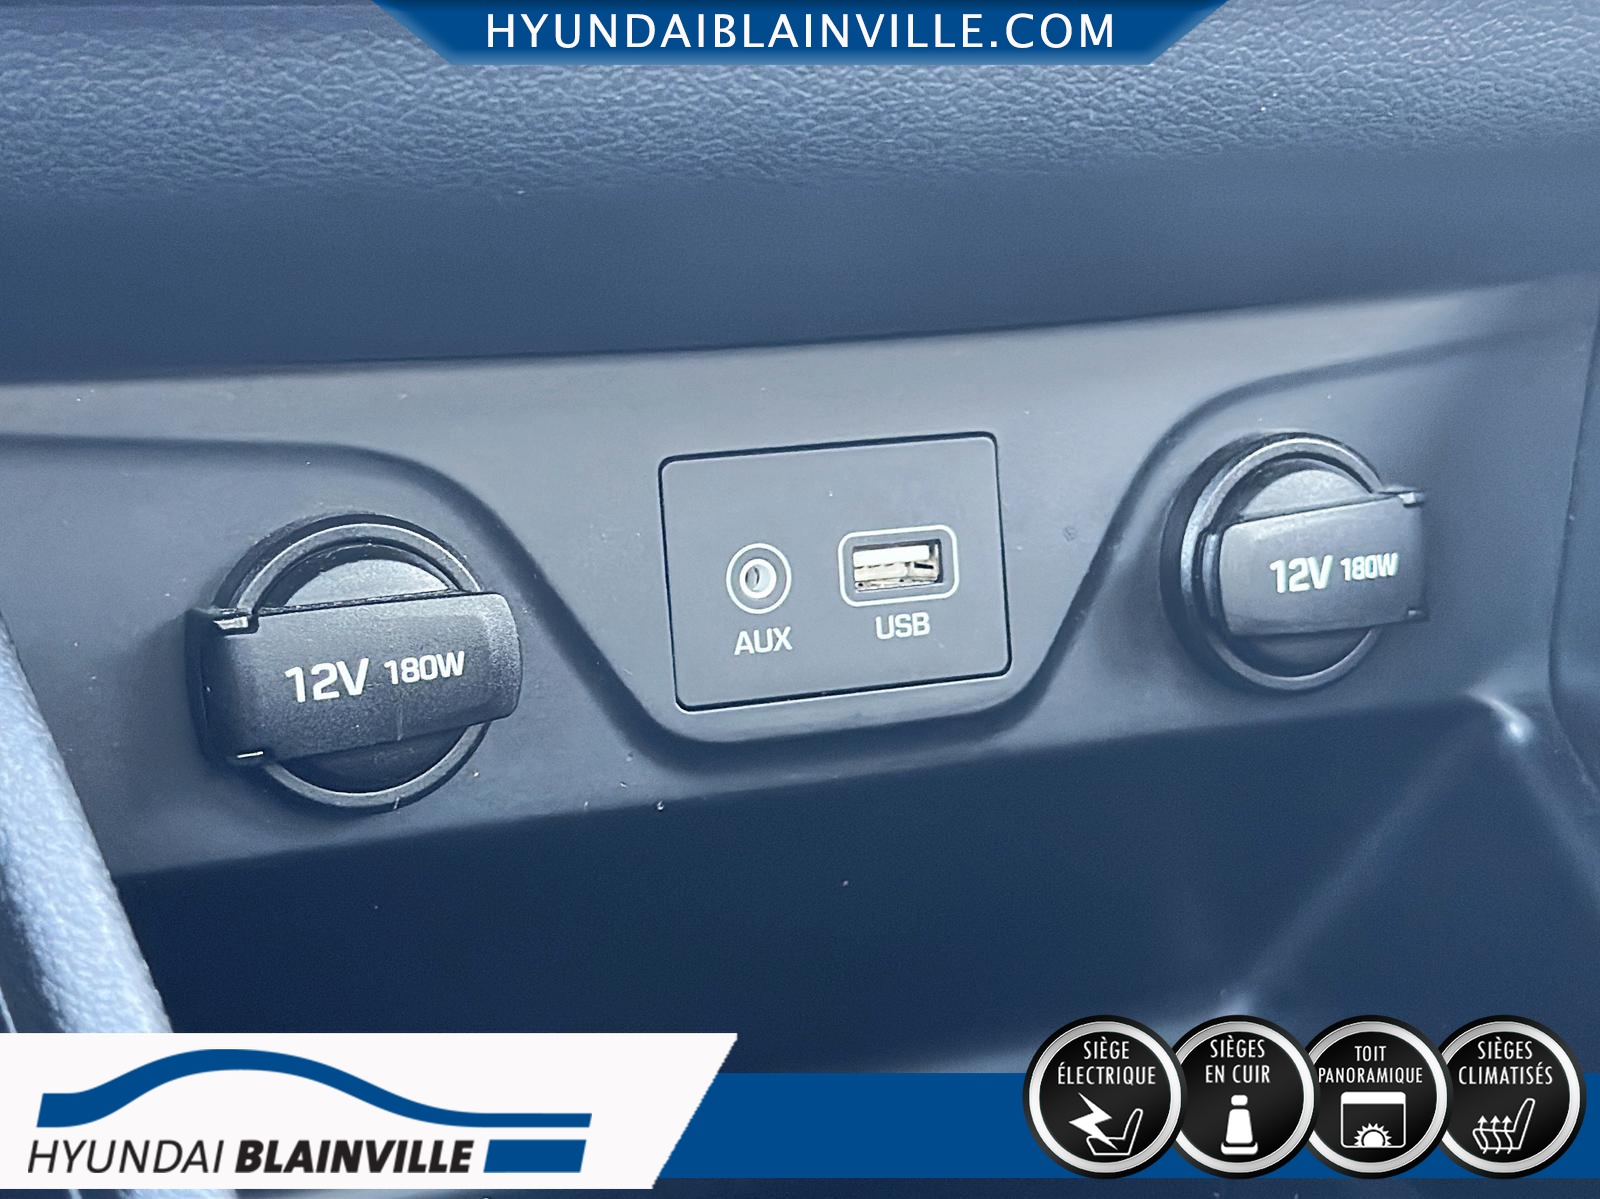 2017 Hyundai Tucson ULTIMATE, AWD, 1.6T, CUIR, TOIT PANORAMIQUE+ Main Image